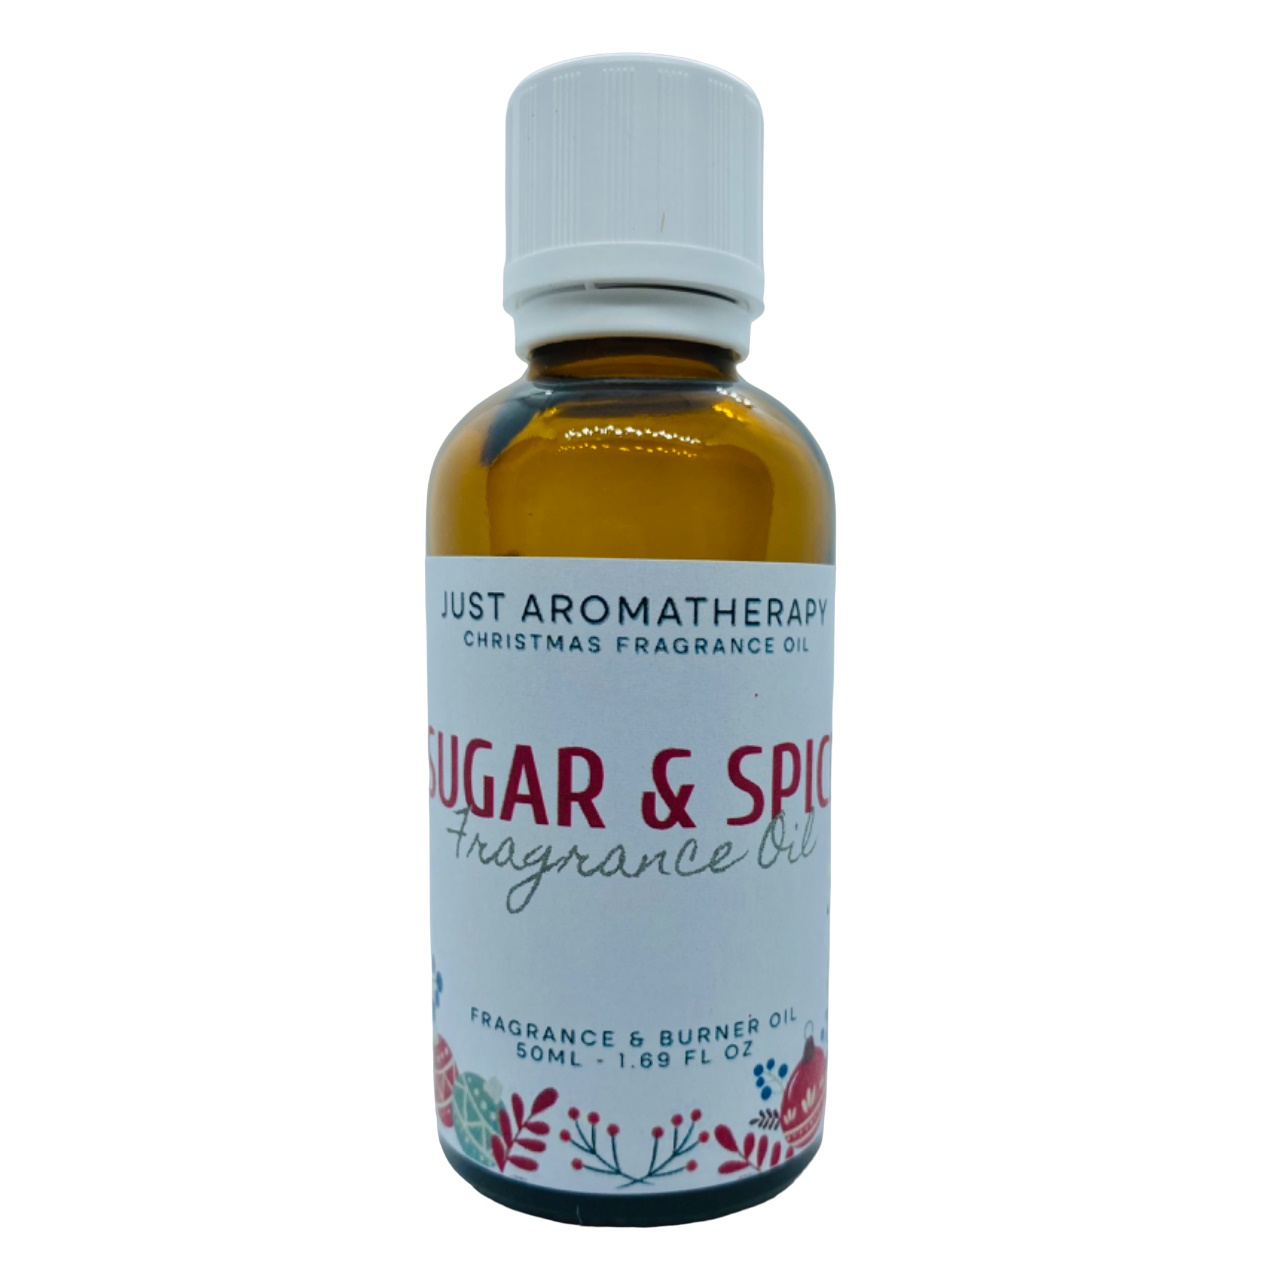 Sugar & Spice Christmas & Winter Fragrance Oil - Refresher Oils - 50ml